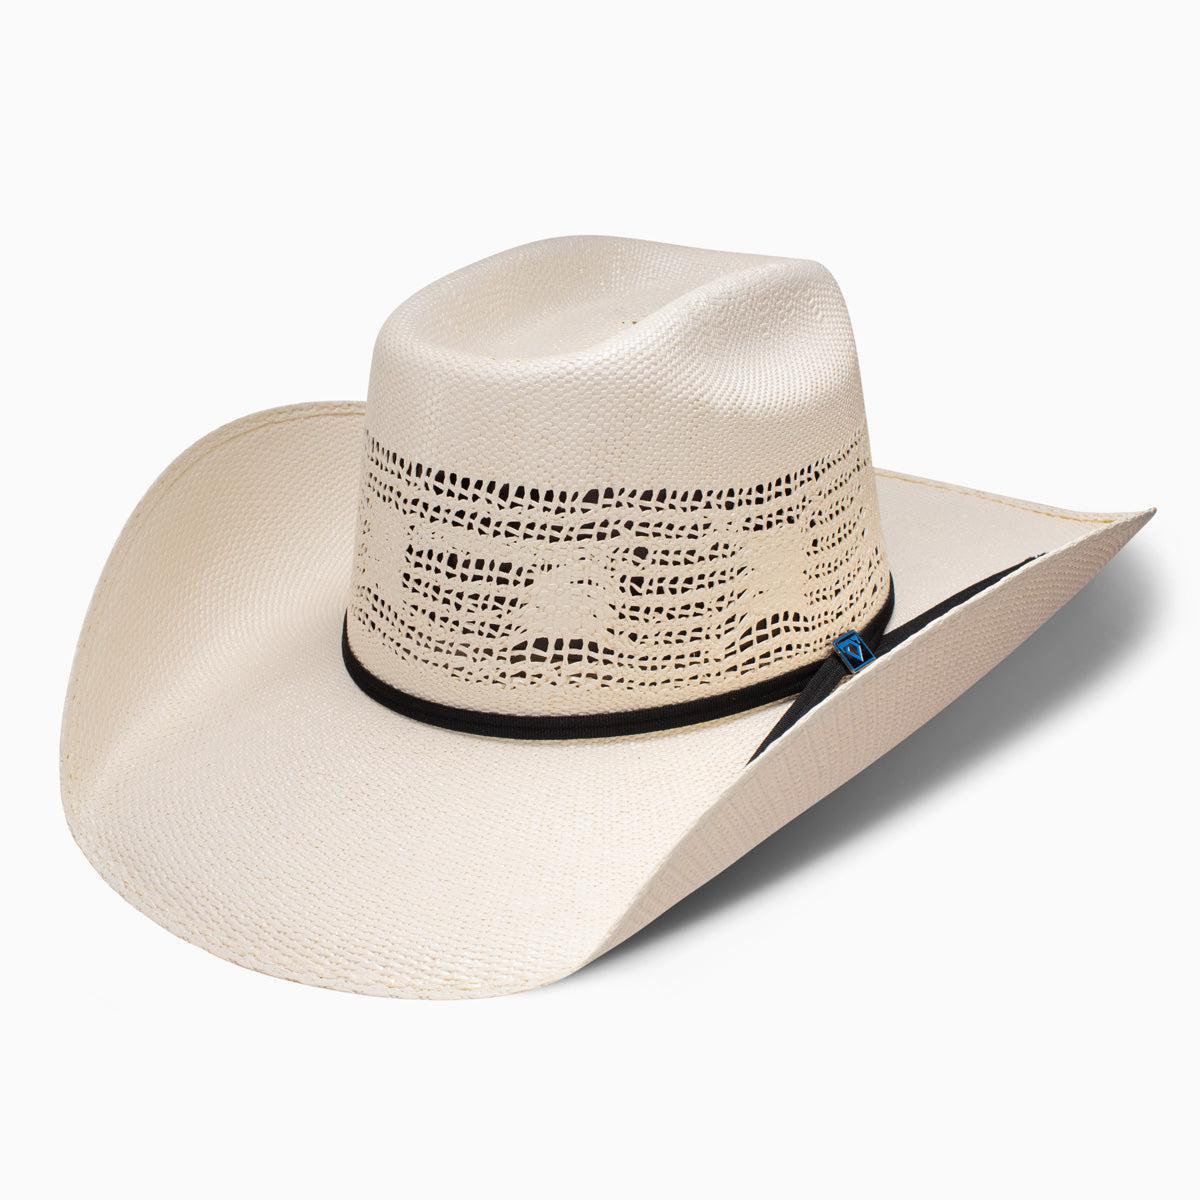 Resistol Unisex Cojo Vaquero Straw Cowboy Hat RSCOVQ-CJ428167